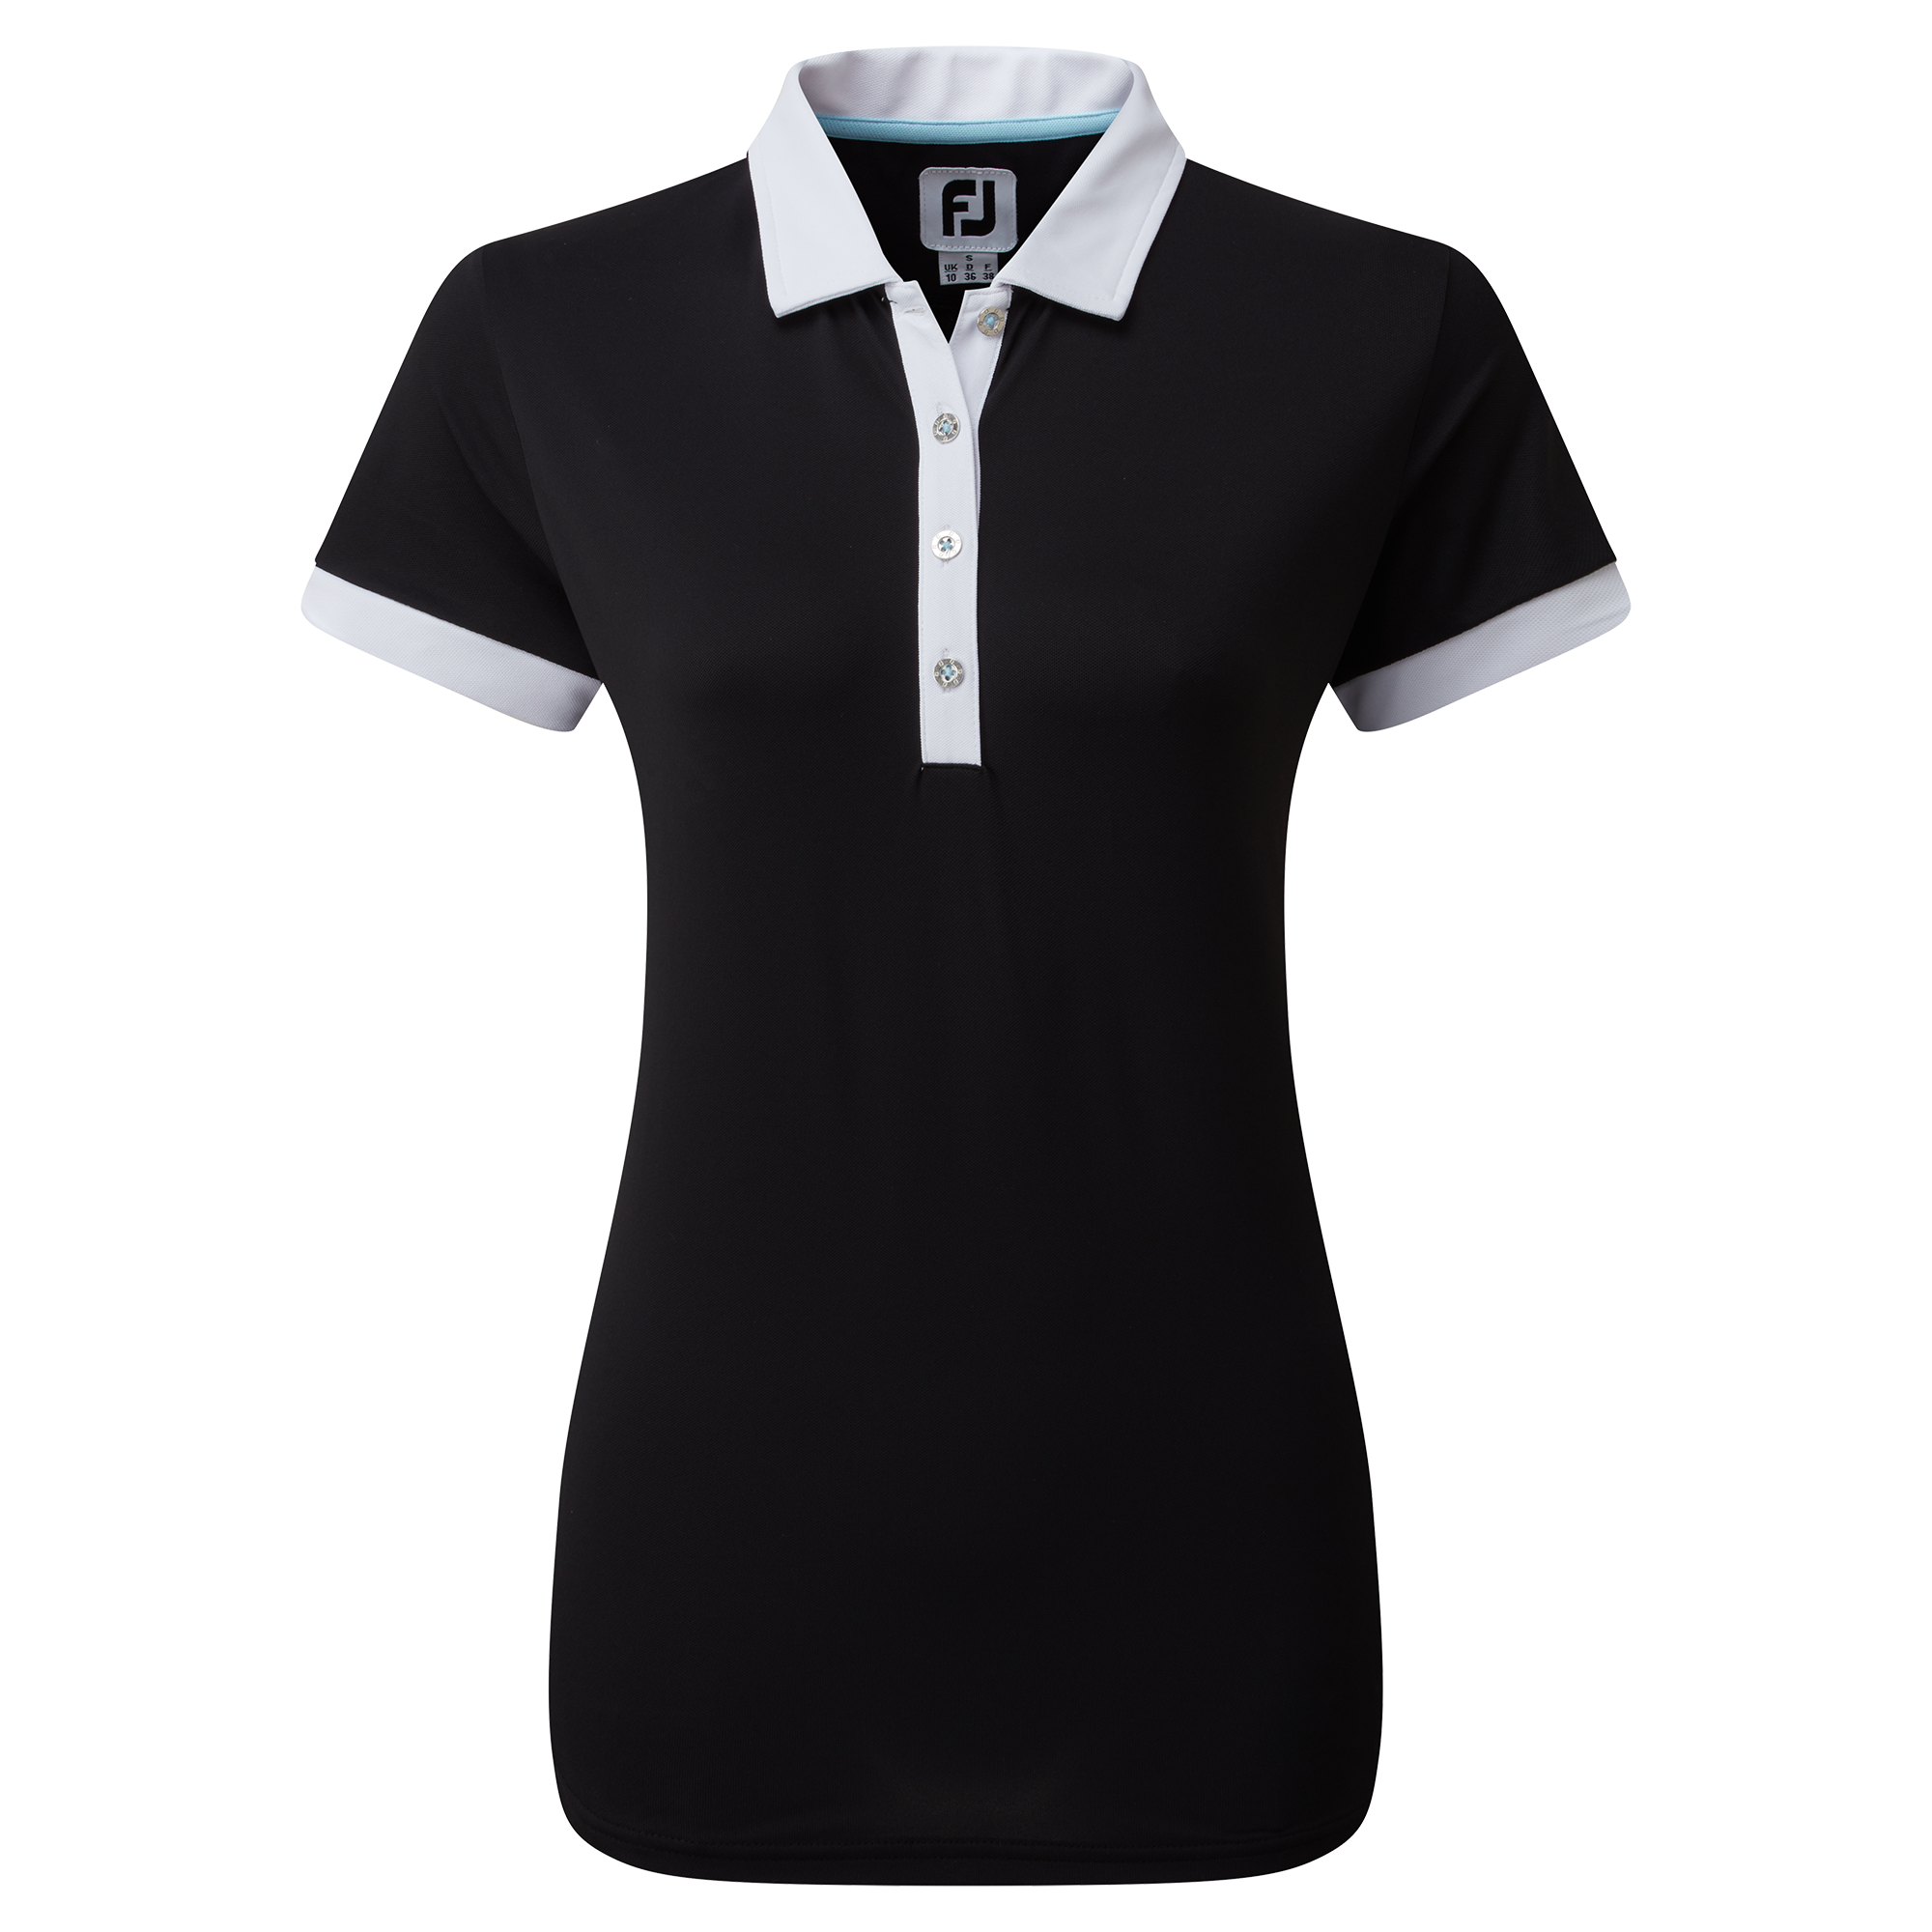 FootJoy Colour Block Pique dámské golfové triko, černé, vel. XS